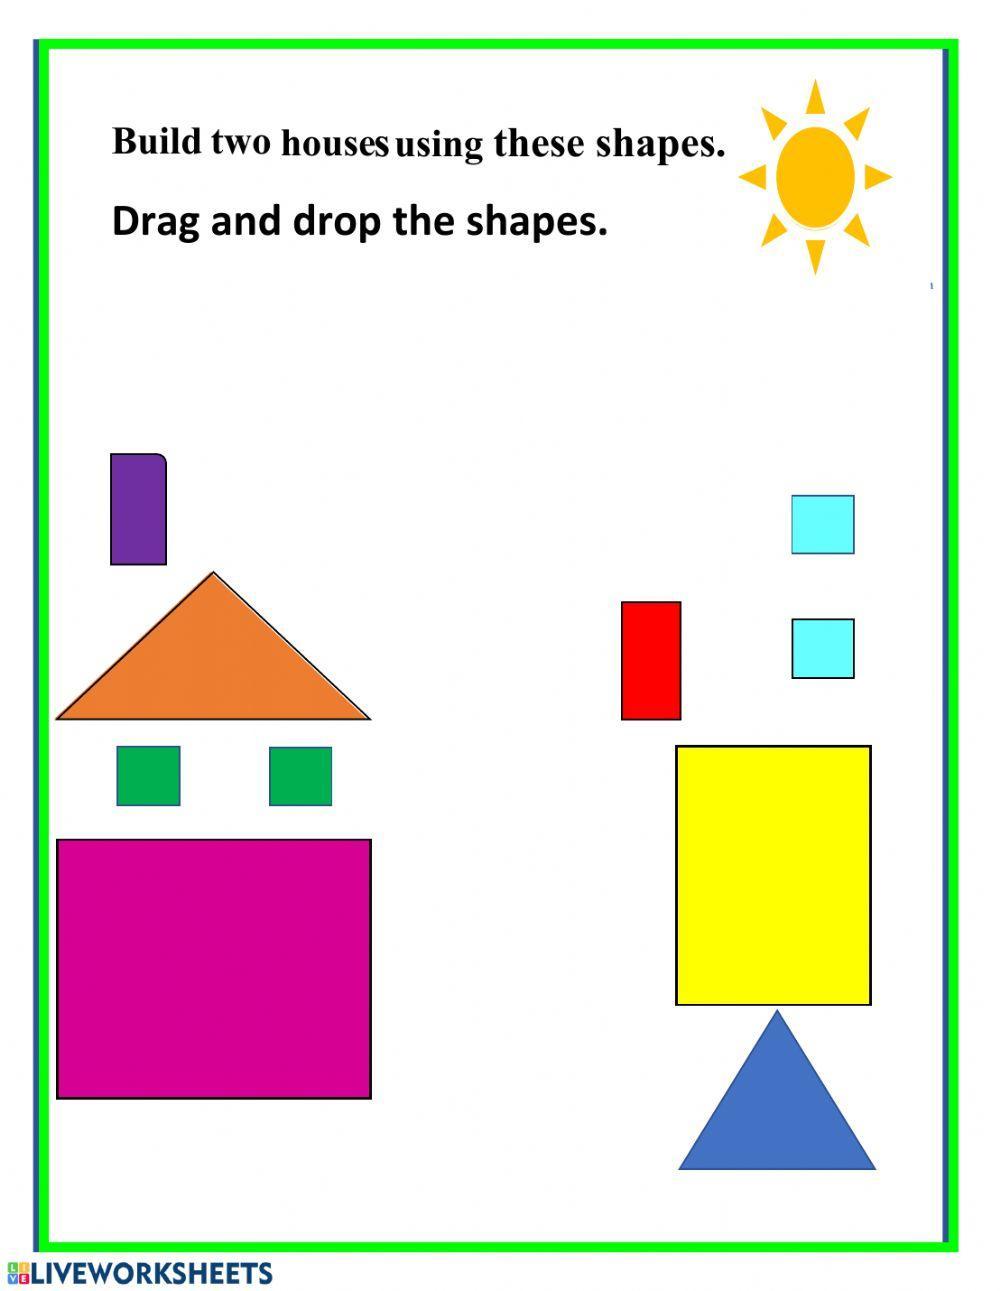 Building houses using basic shapes